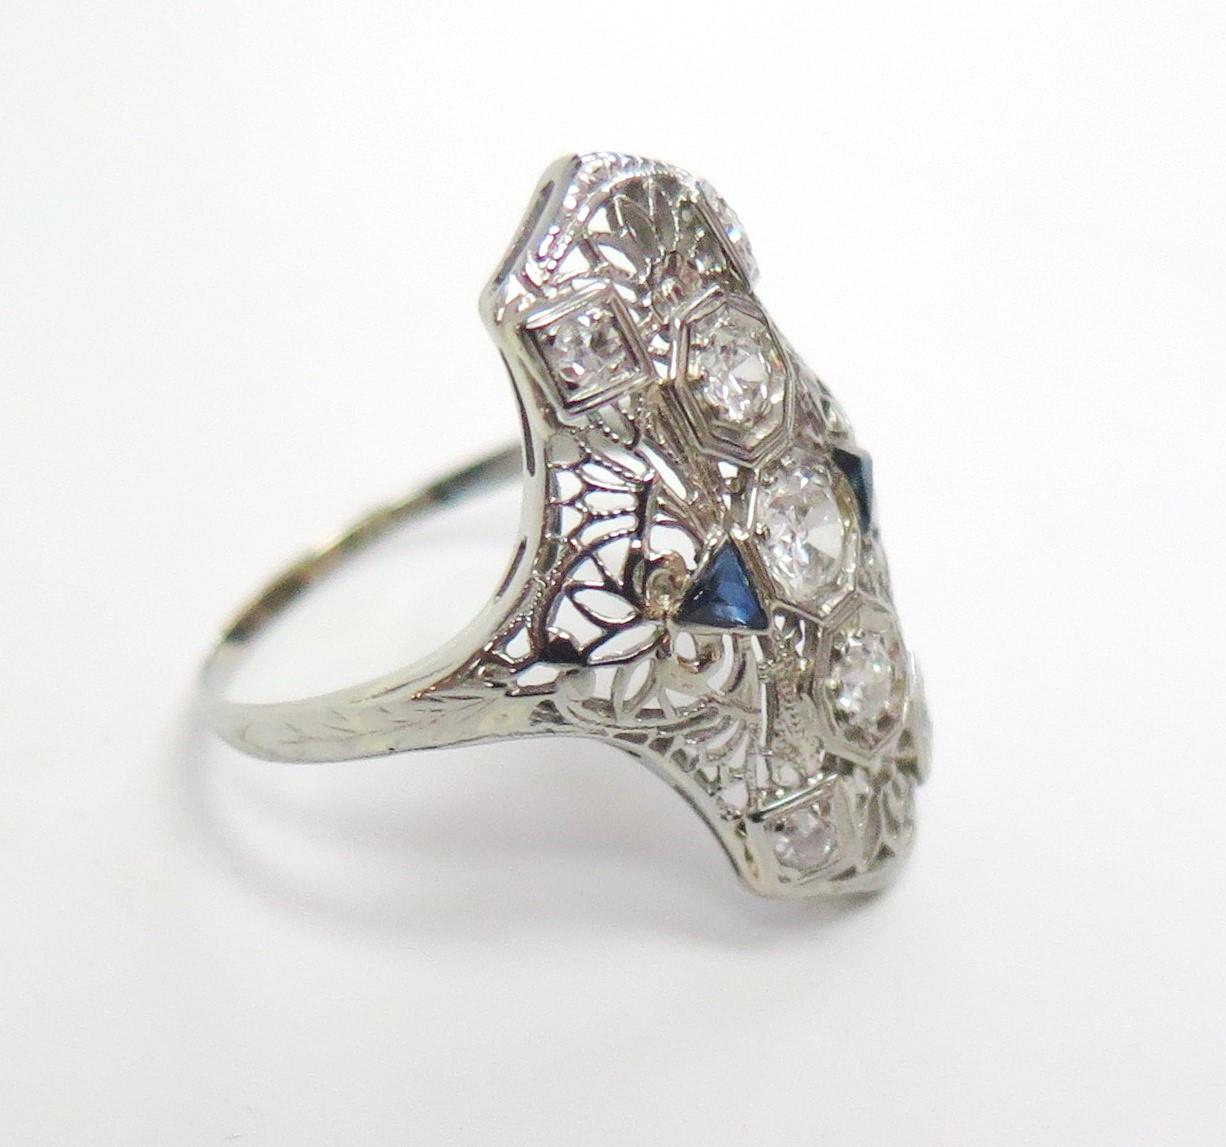 Women's Art Deco Filigree Ring with Diamonds and Sapphires, 18 Karat White Gold